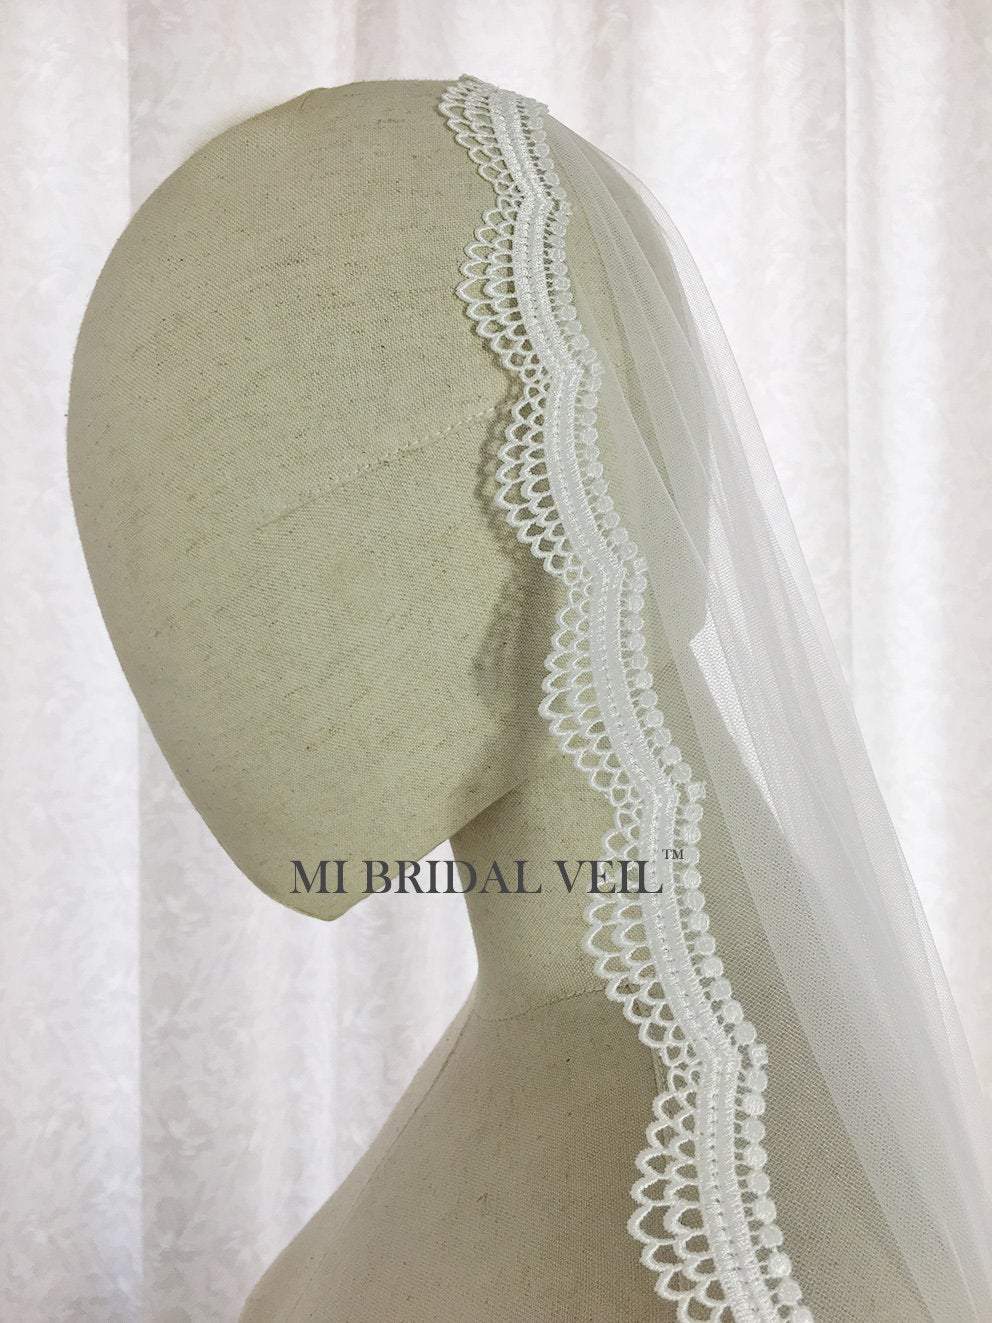 Mantilla Lace Wedding Veil, Crochet Venice Fingertip Lace Bridal Veil, MI BRIDAL